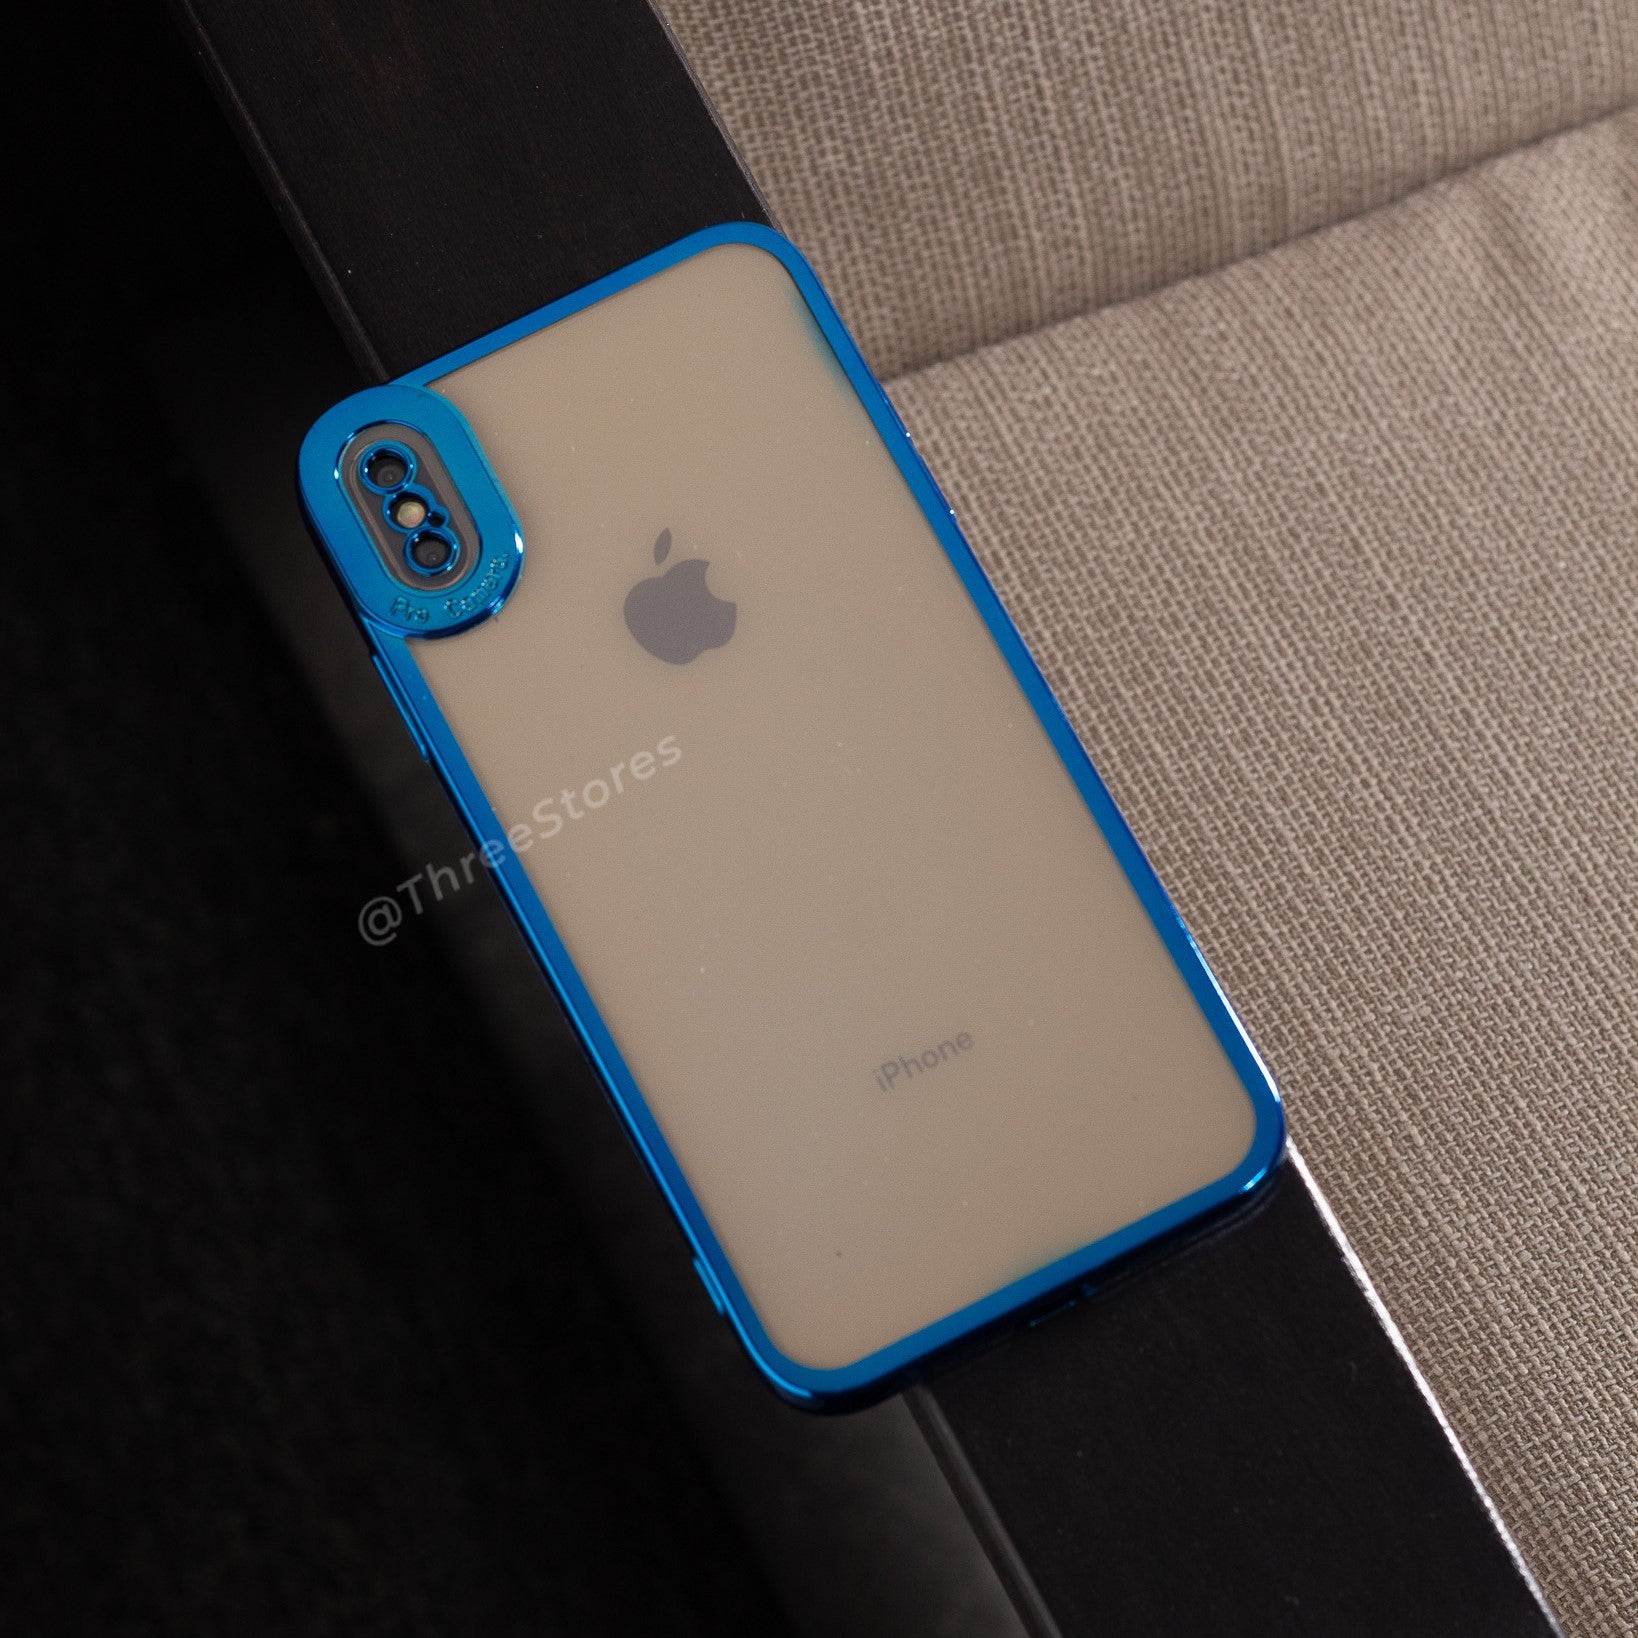 PhoneCase Slim Camera Protection Case iPhone X Max